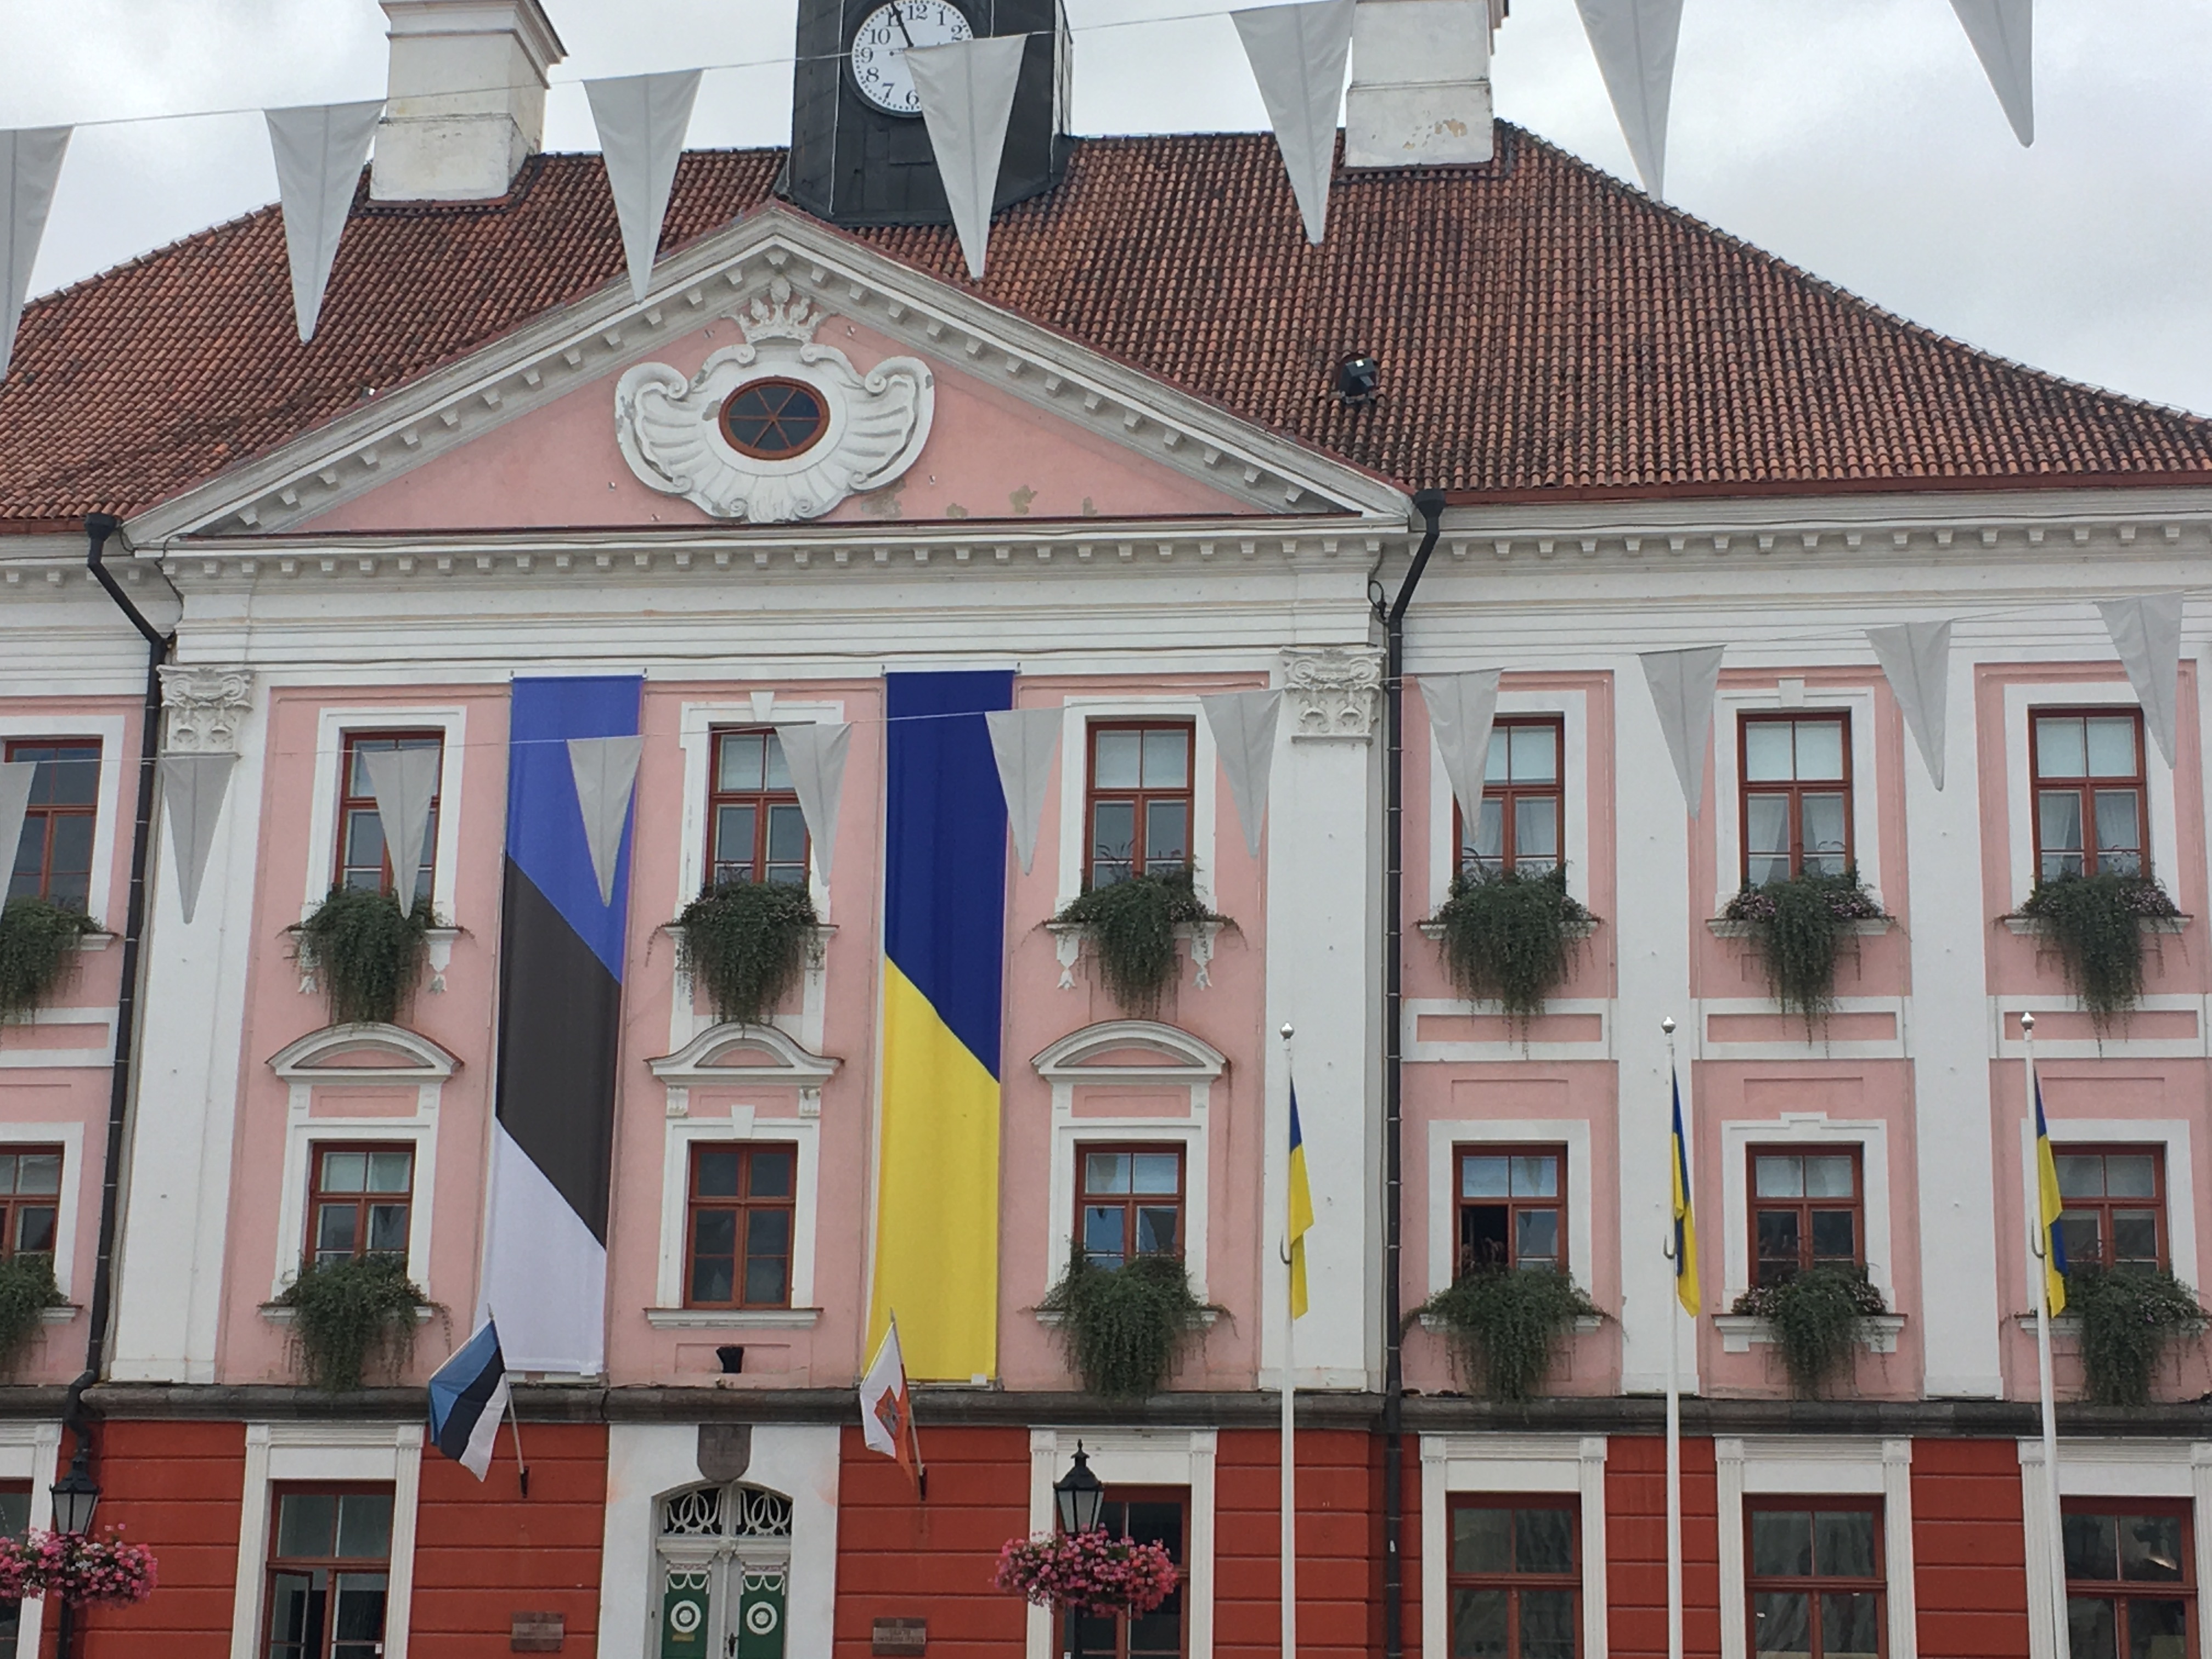 Tartu Town Hall flying both Estonian and Ukranian flags